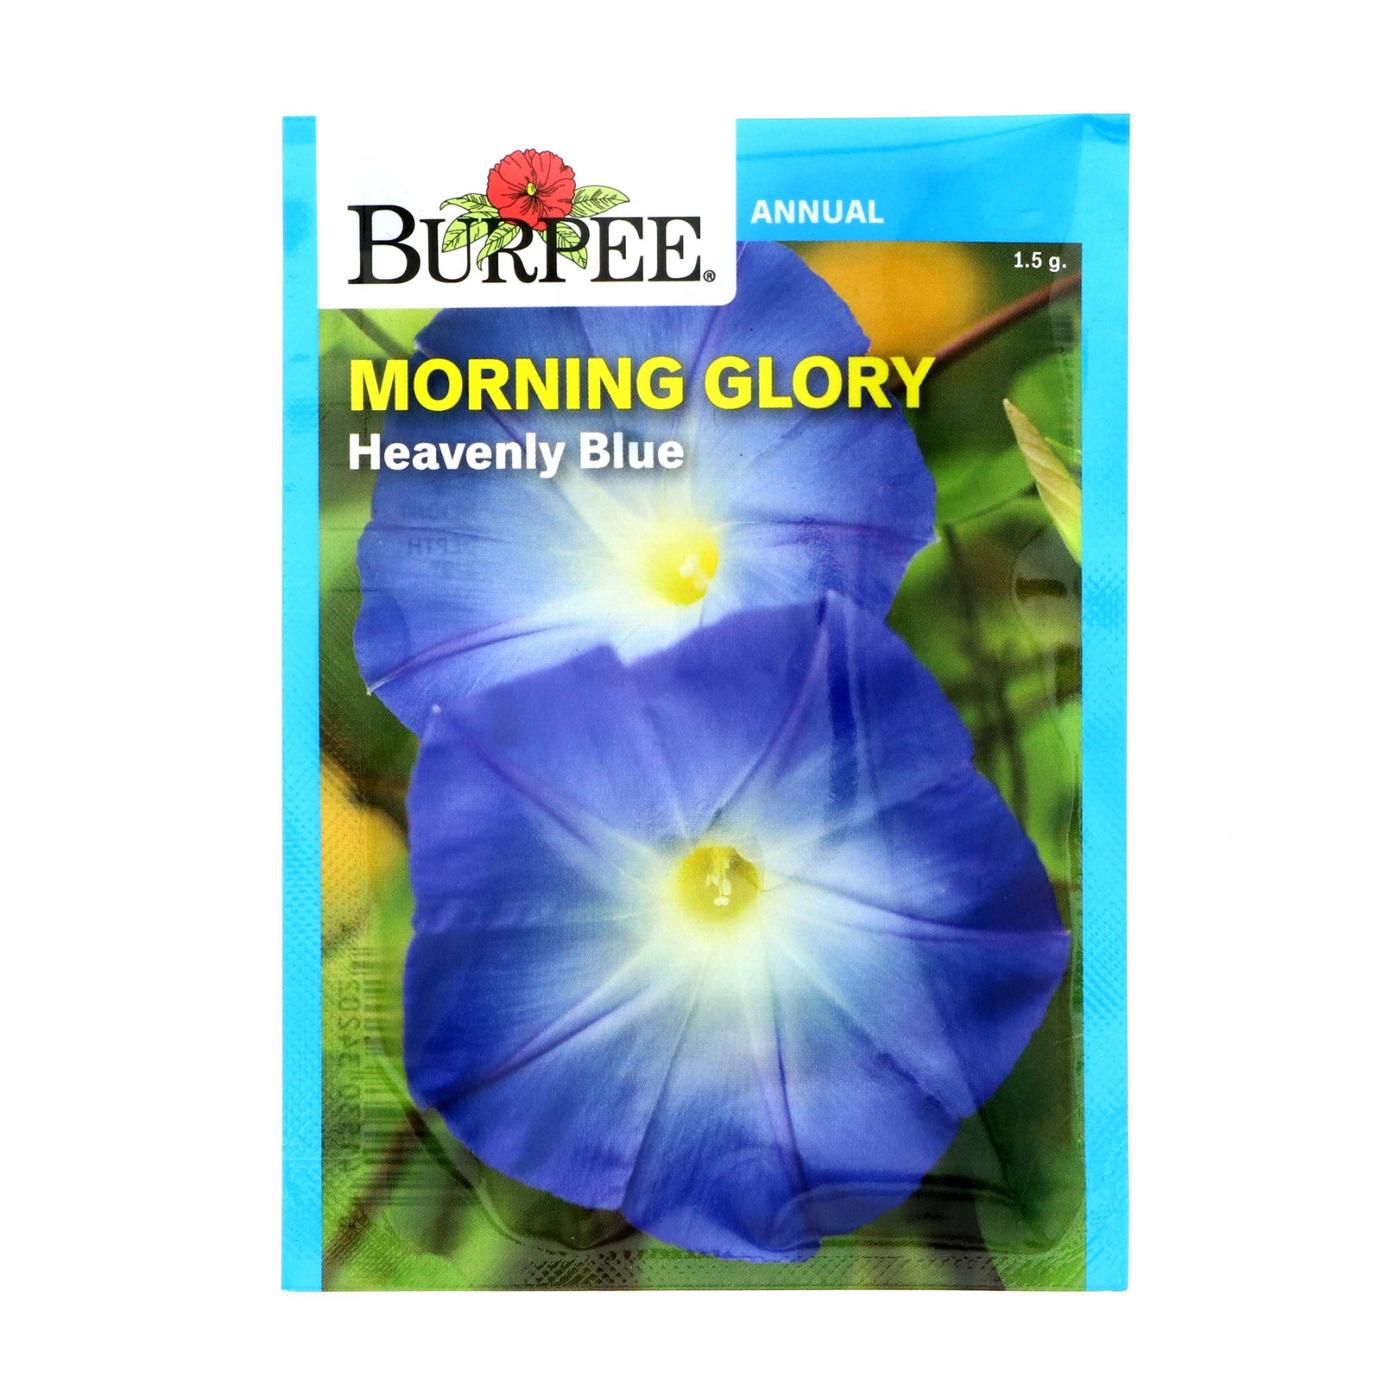 Burpee Morning Glory, Heavenly Blue Seeds; image 1 of 2